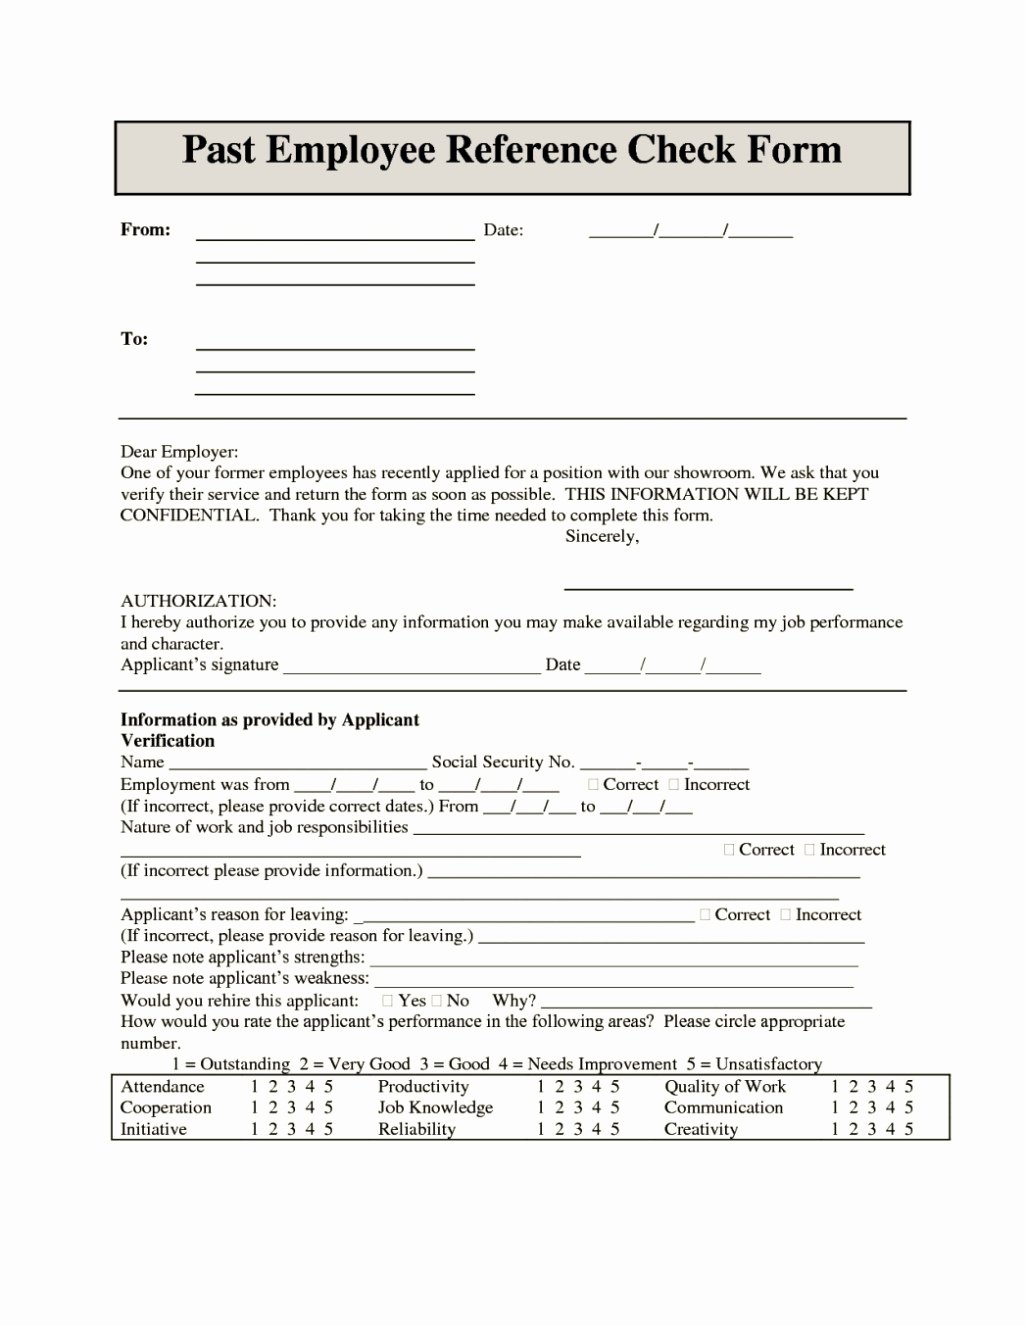 Previous Employment Verification form Elegant Apartment Tenant Employment Verification form 1 Past Picture Printable Resume Sample Fmcsa